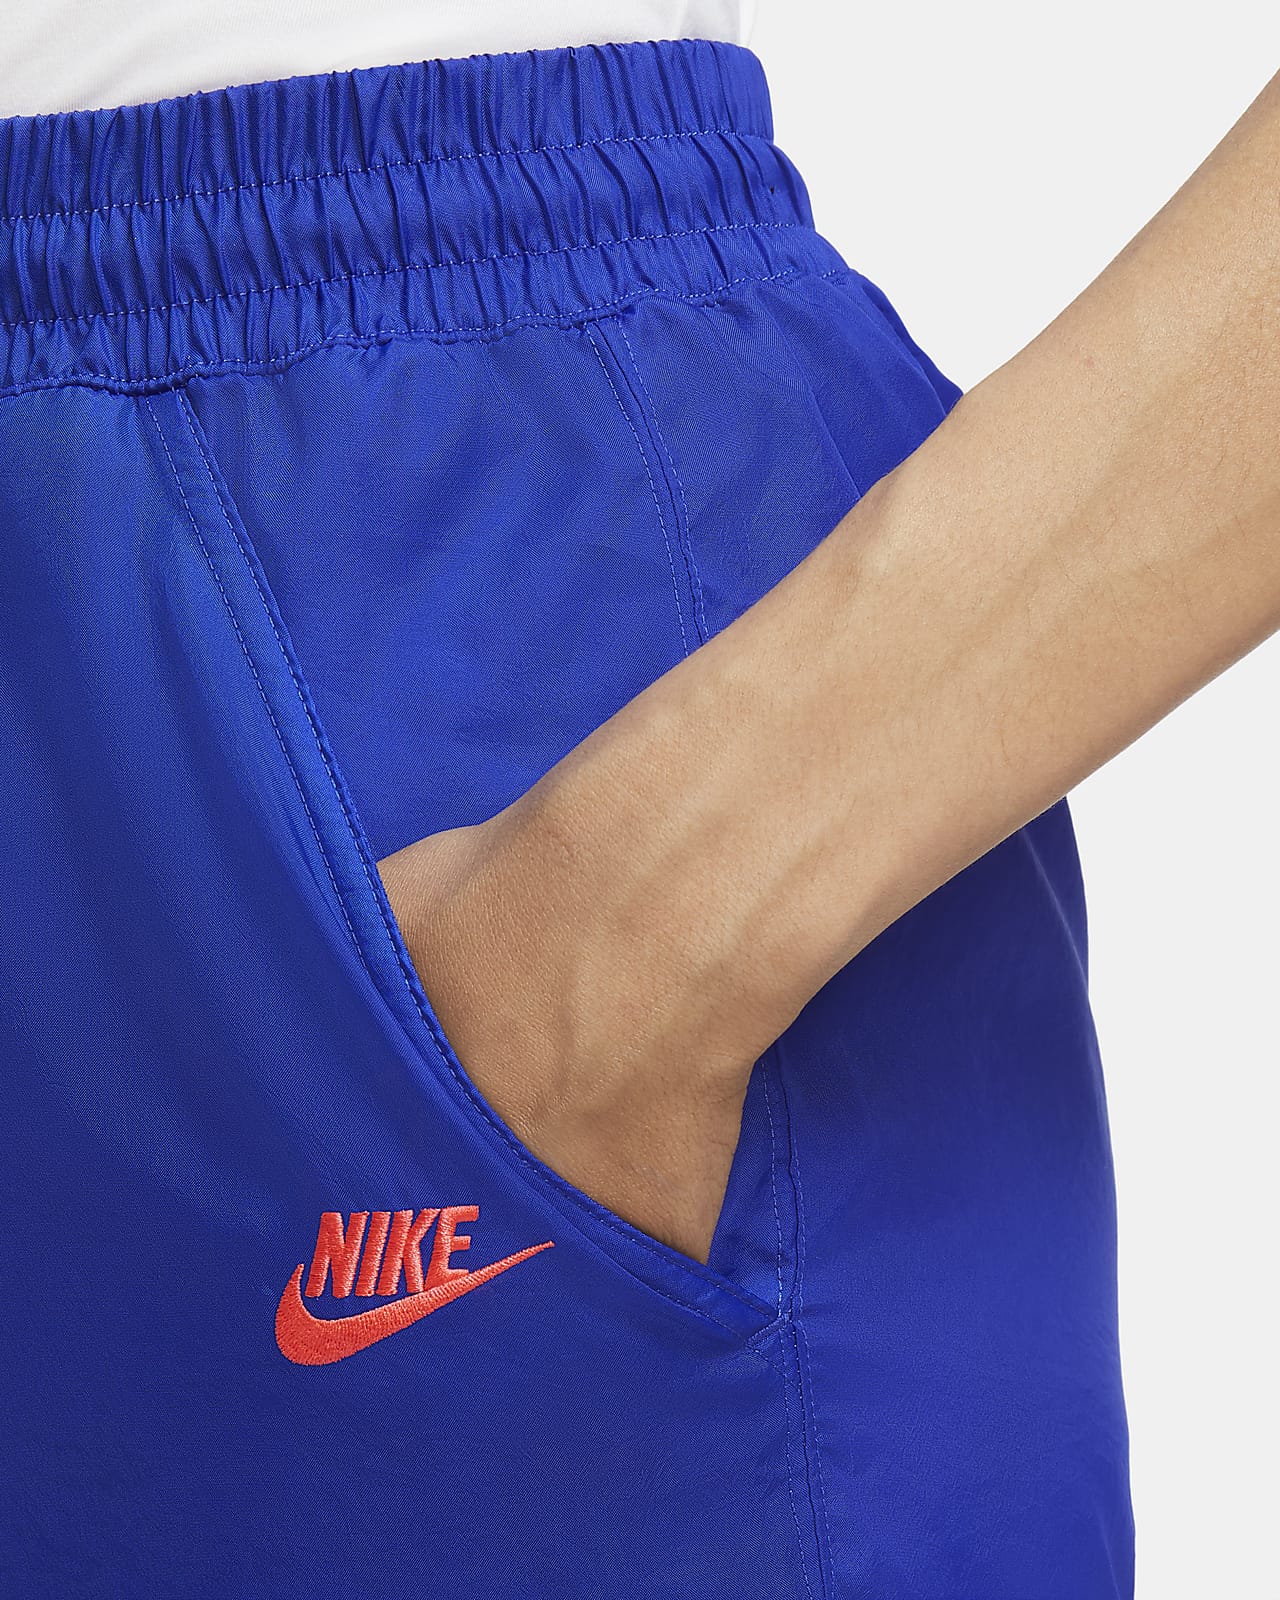 NikeCourt Women's Tennis Pants